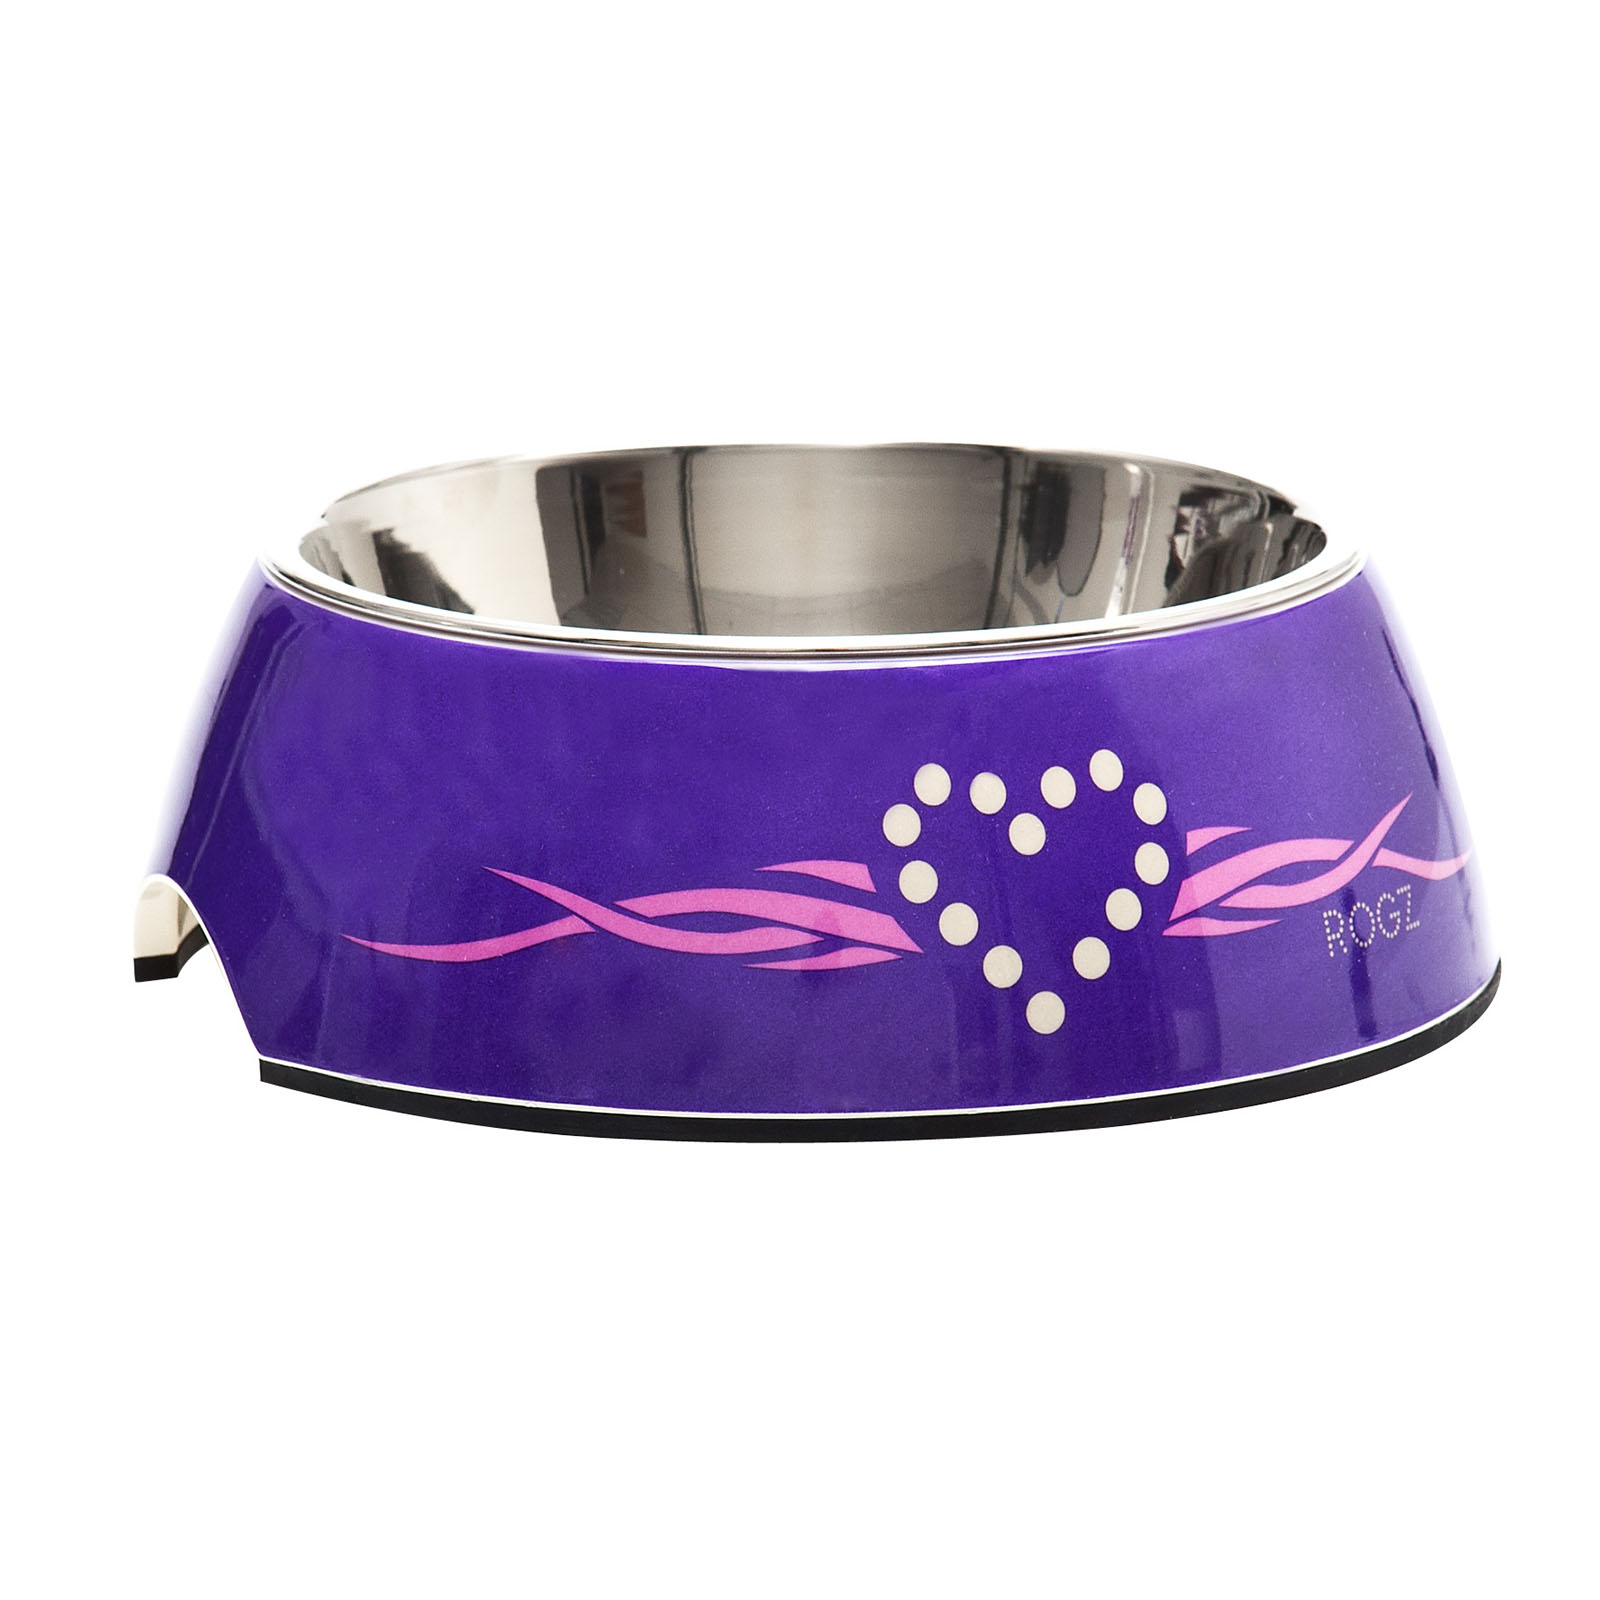 bowl03-bj-purple-medium_1600